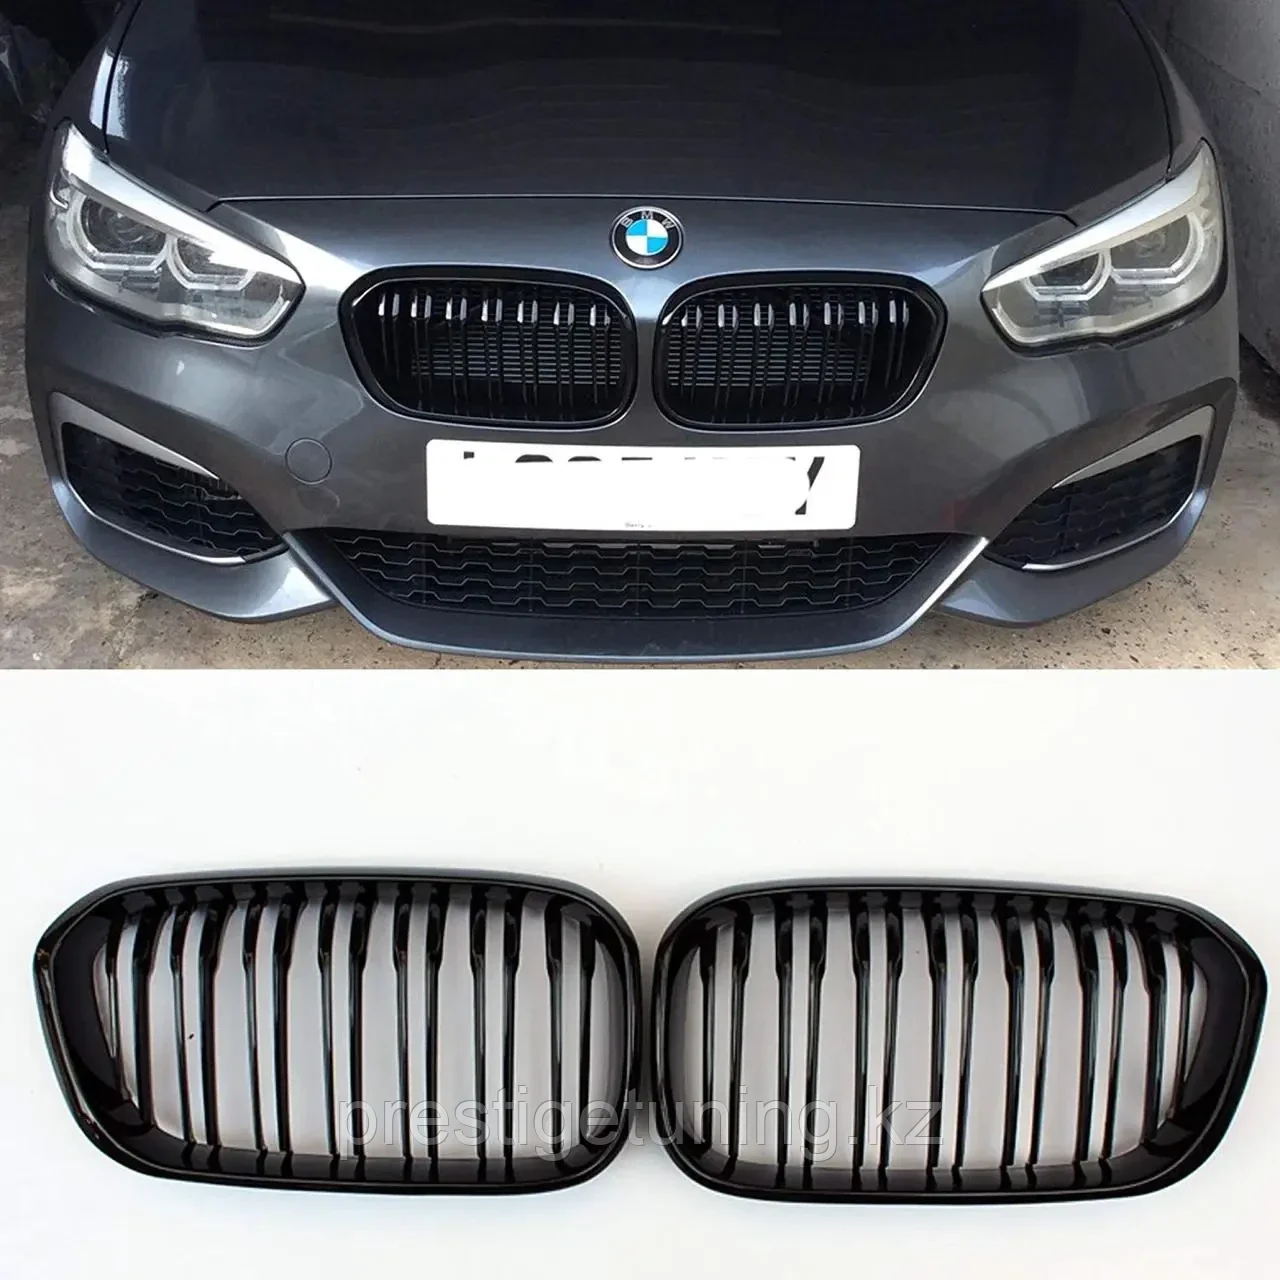 Решетка радиатора на BMW (F20/F21) 2015-17 ноздри в стиле M1 (Черный цвет), фото 1